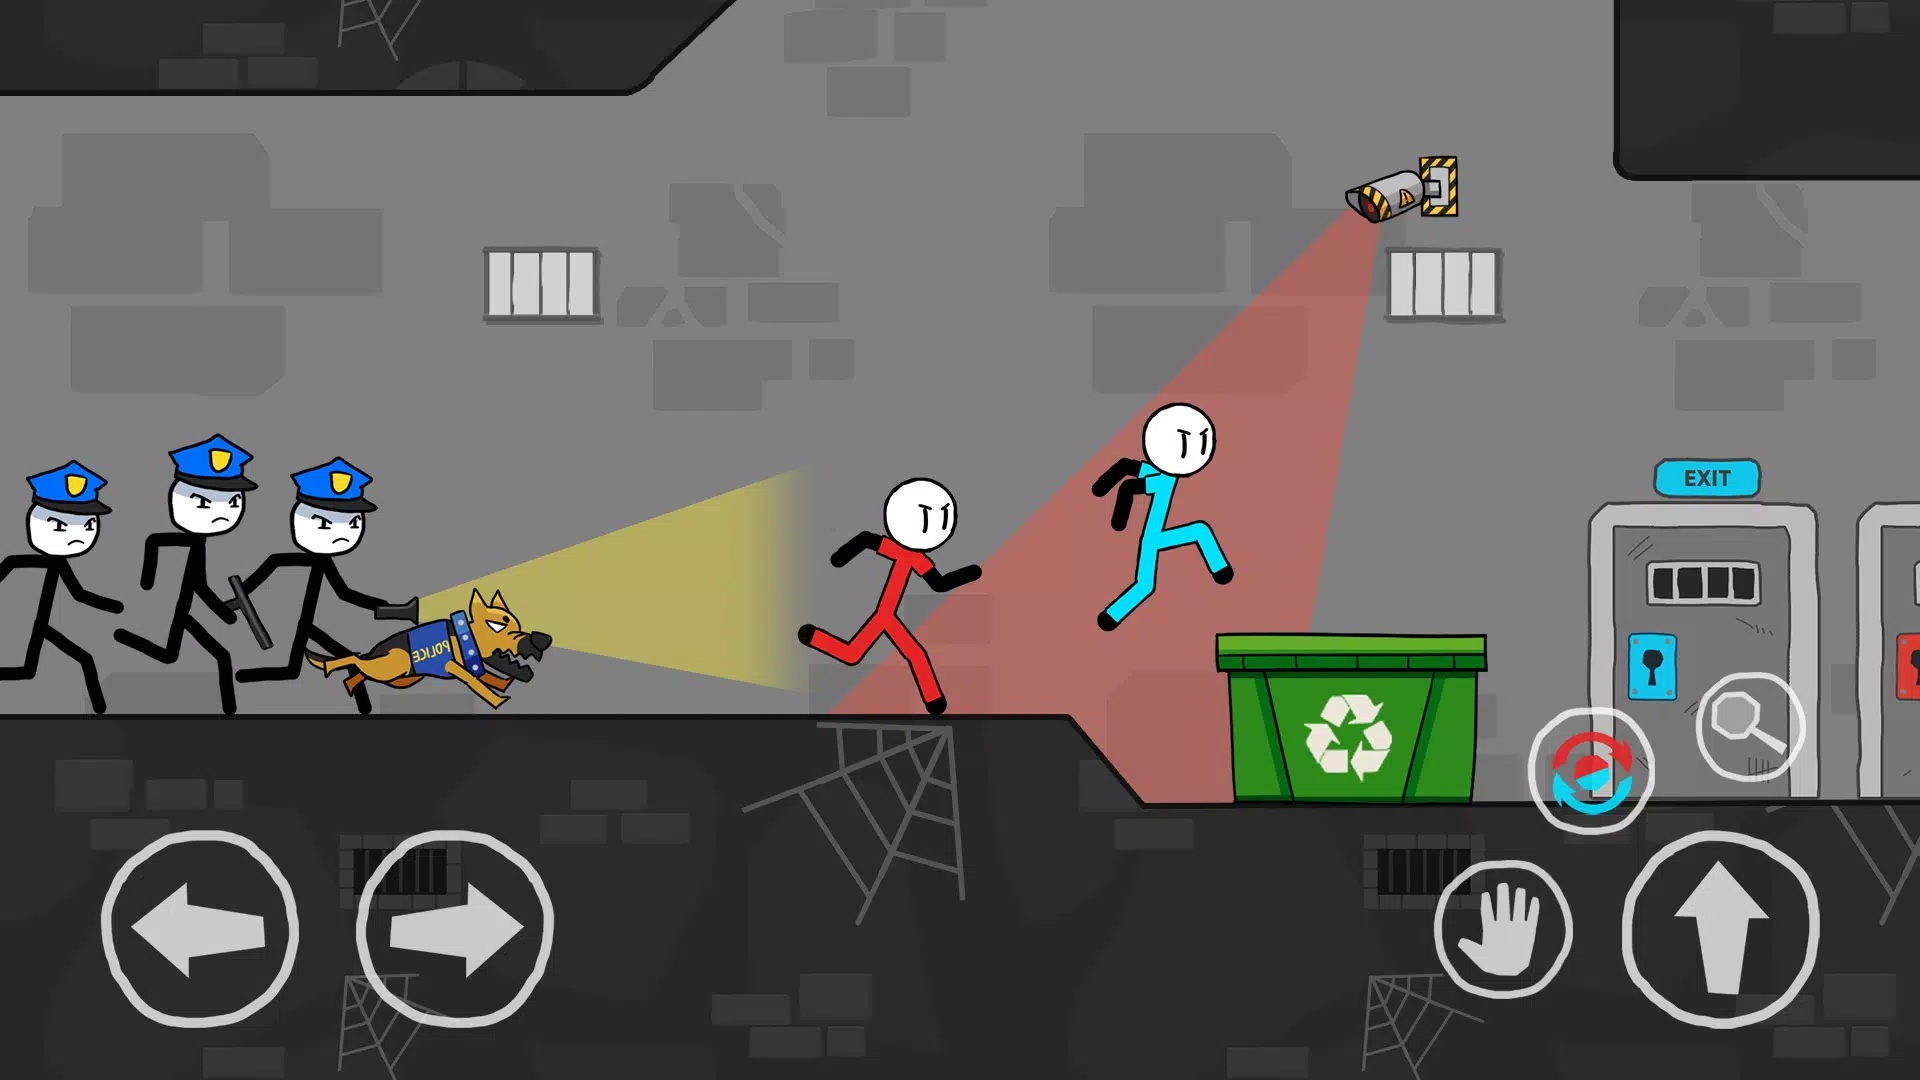 Stickman Escape Game 1.0 APK Download - Android Adventure Games